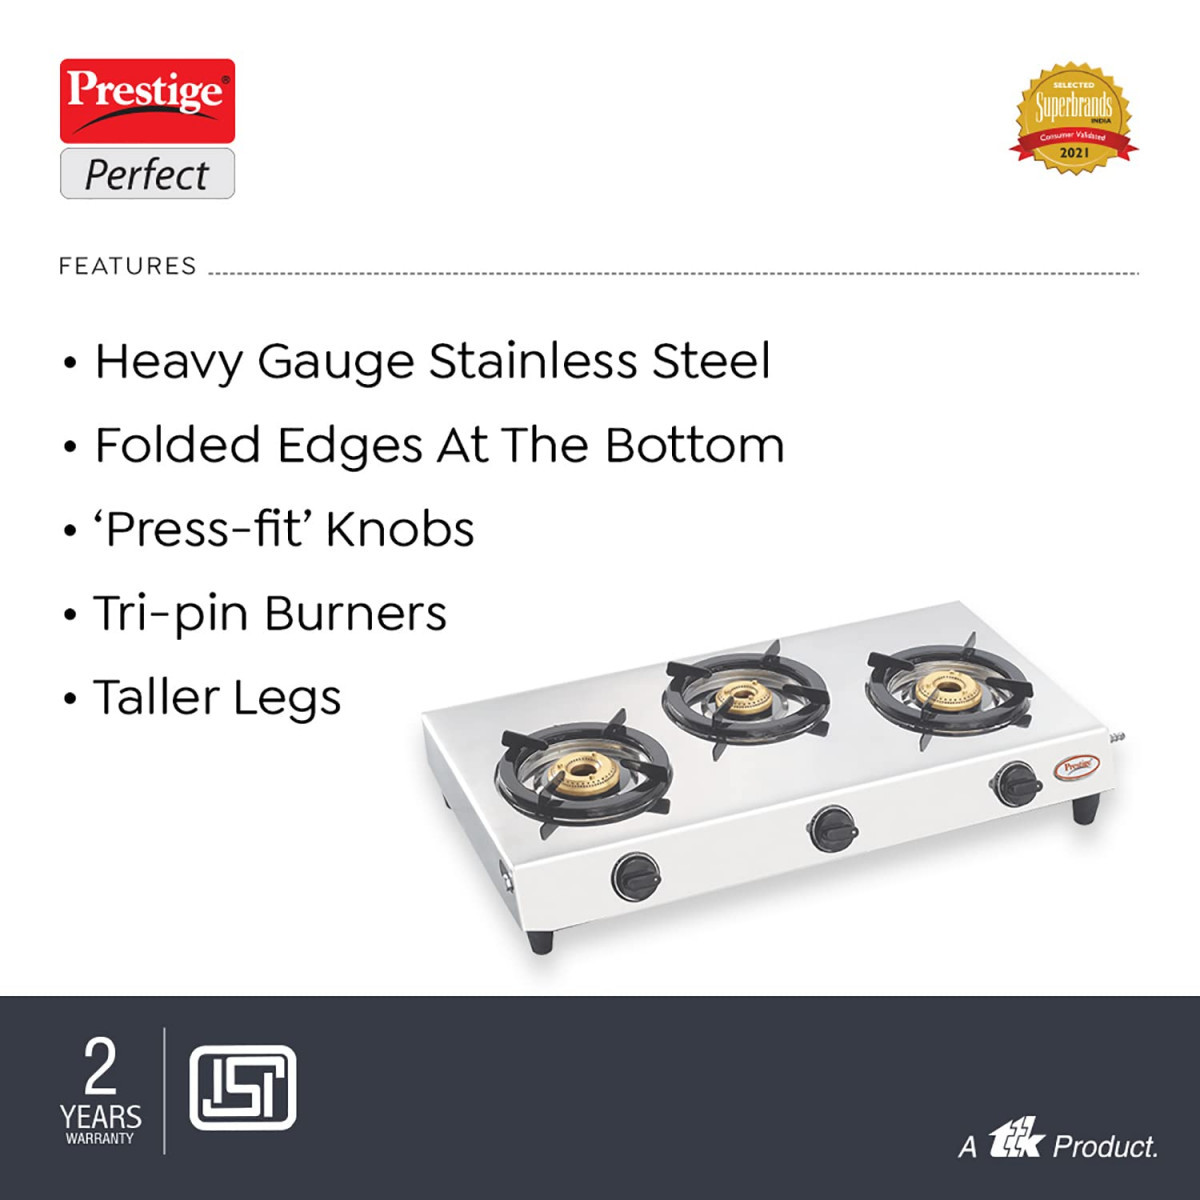 Prestige Gas Stove Perfect - Three Burner Manual  Metallic Silver